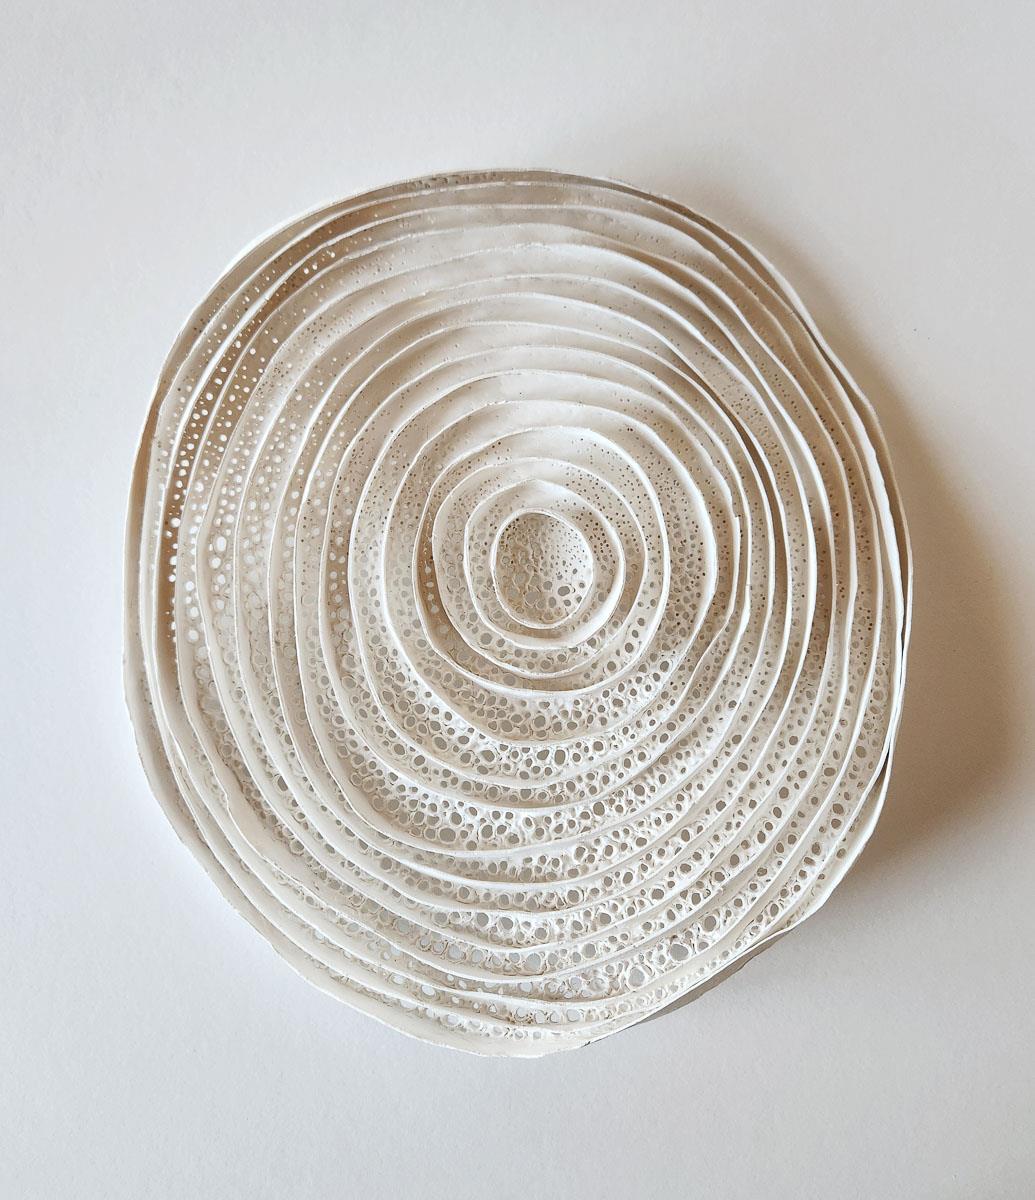 framed circular clay artwork inspired by tree rings